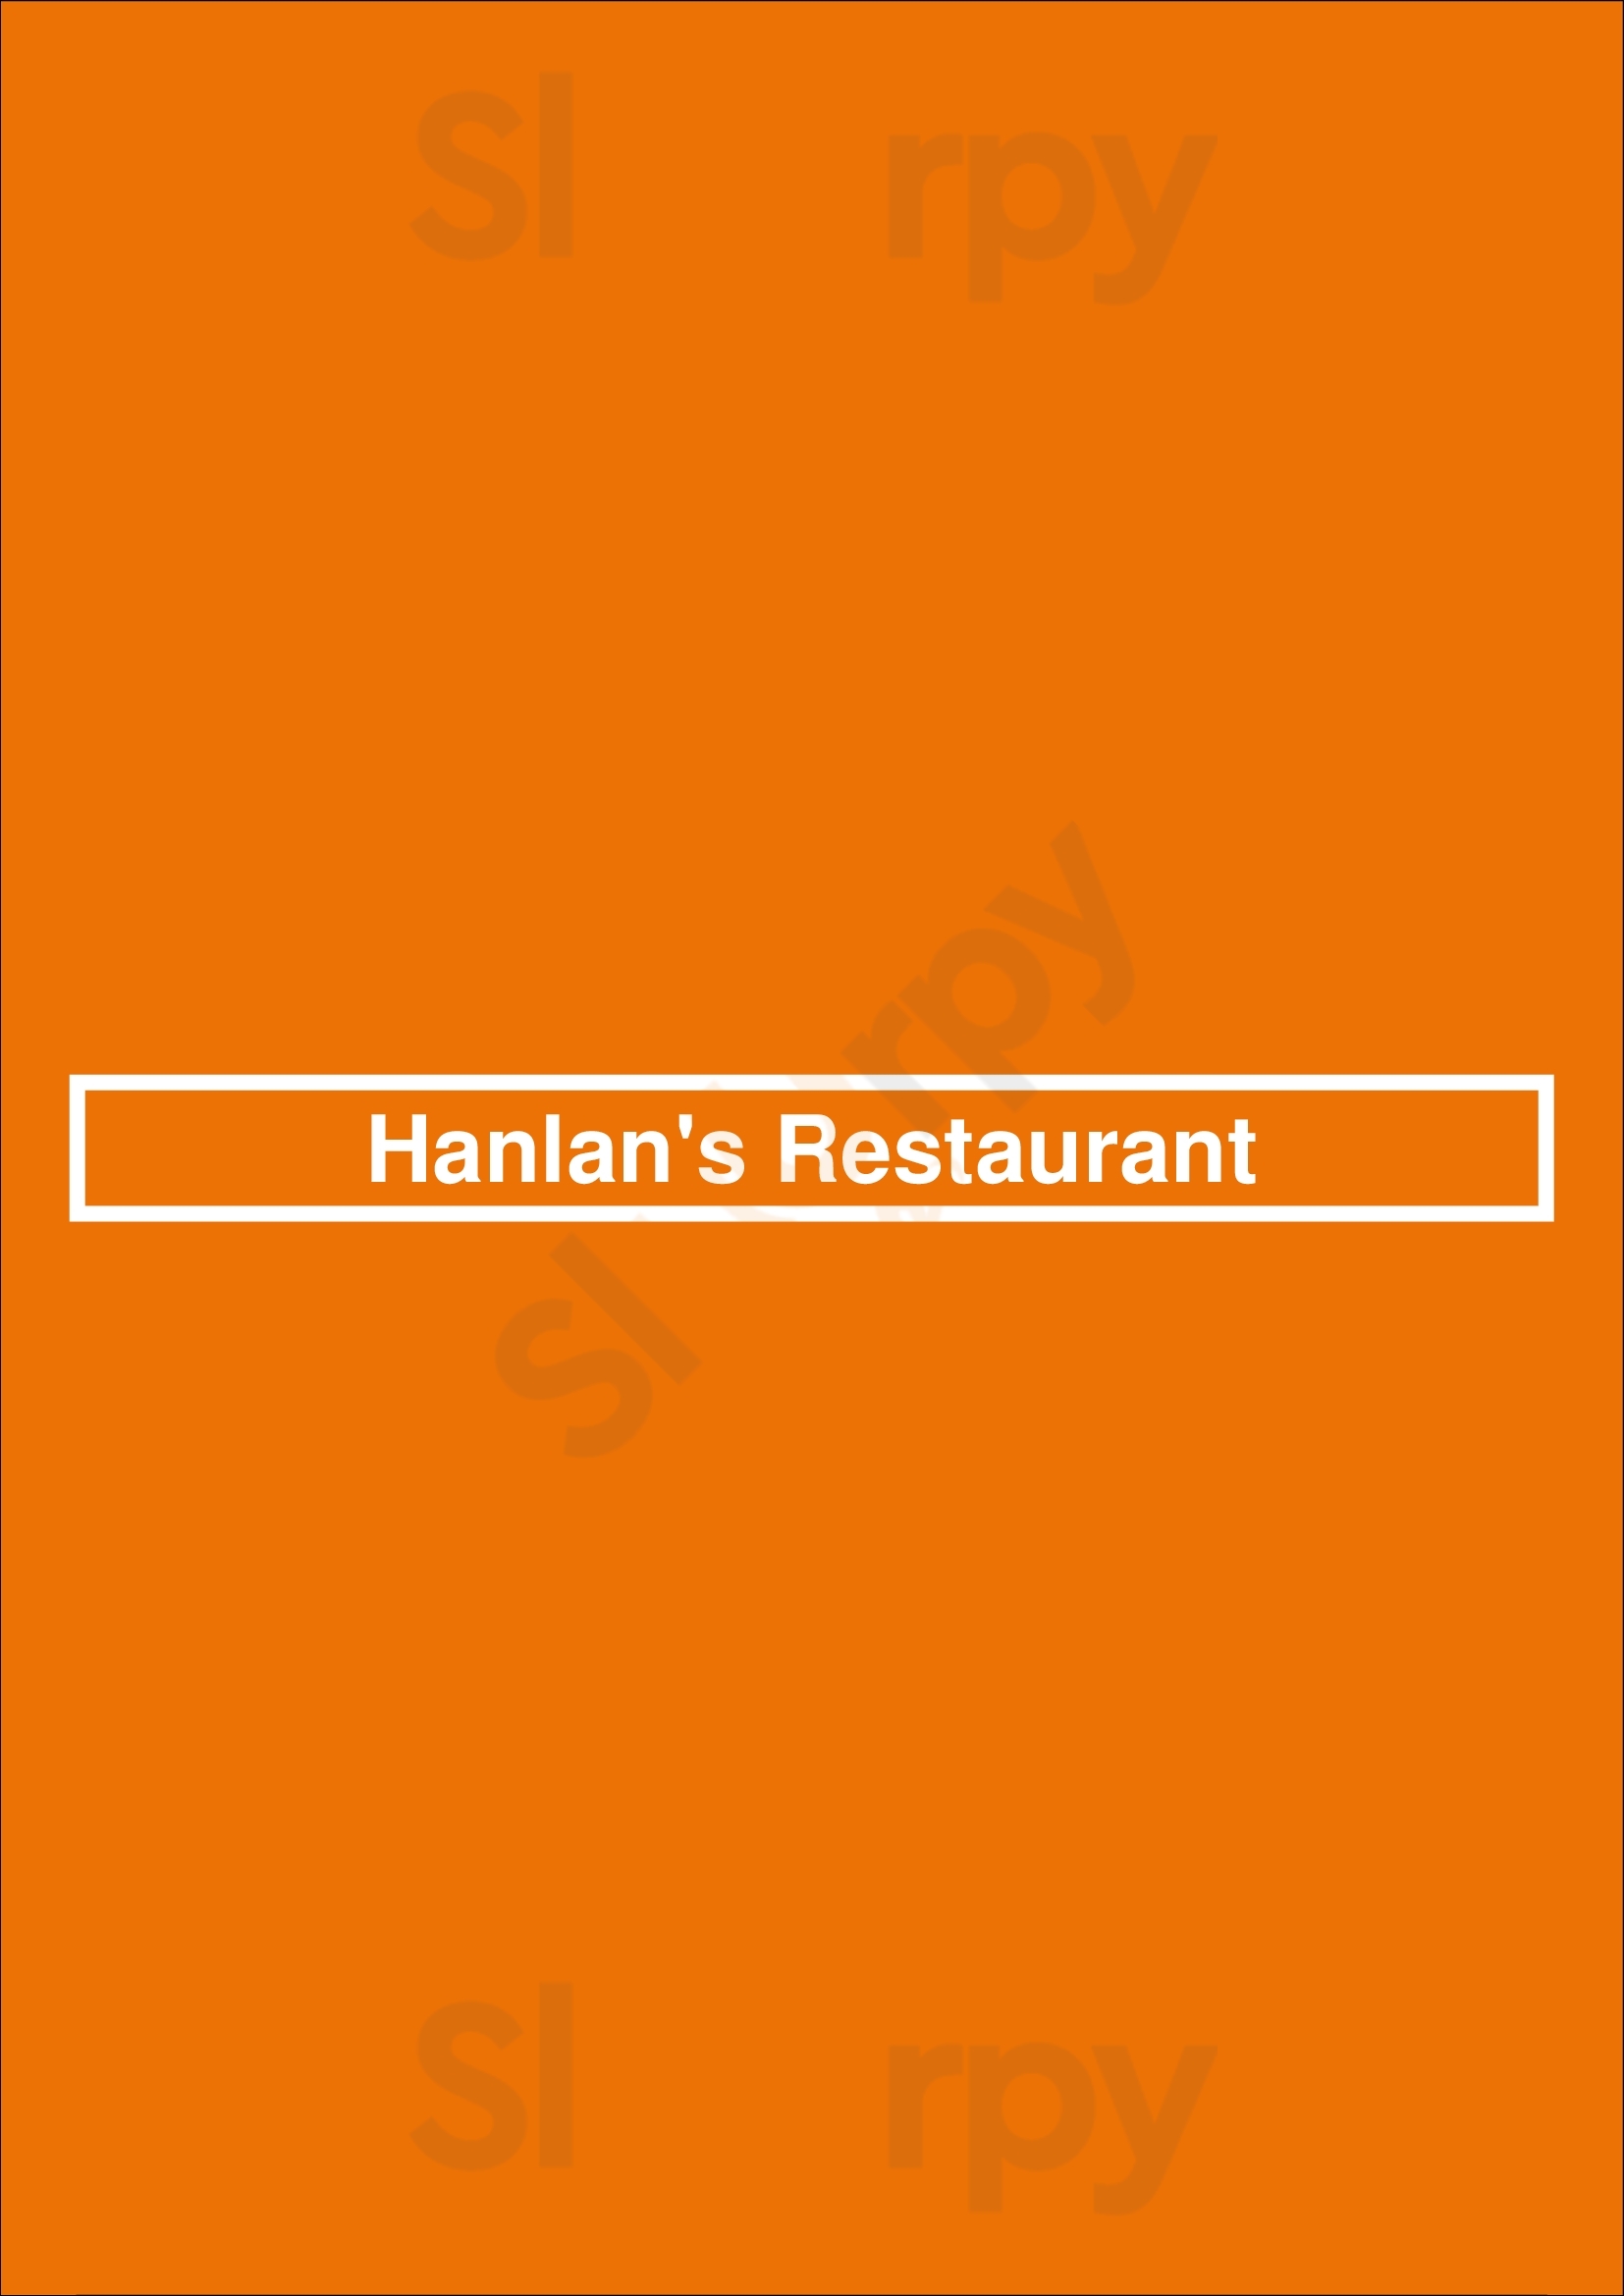 Hanlan's Restaurant Surfers Paradise Menu - 1